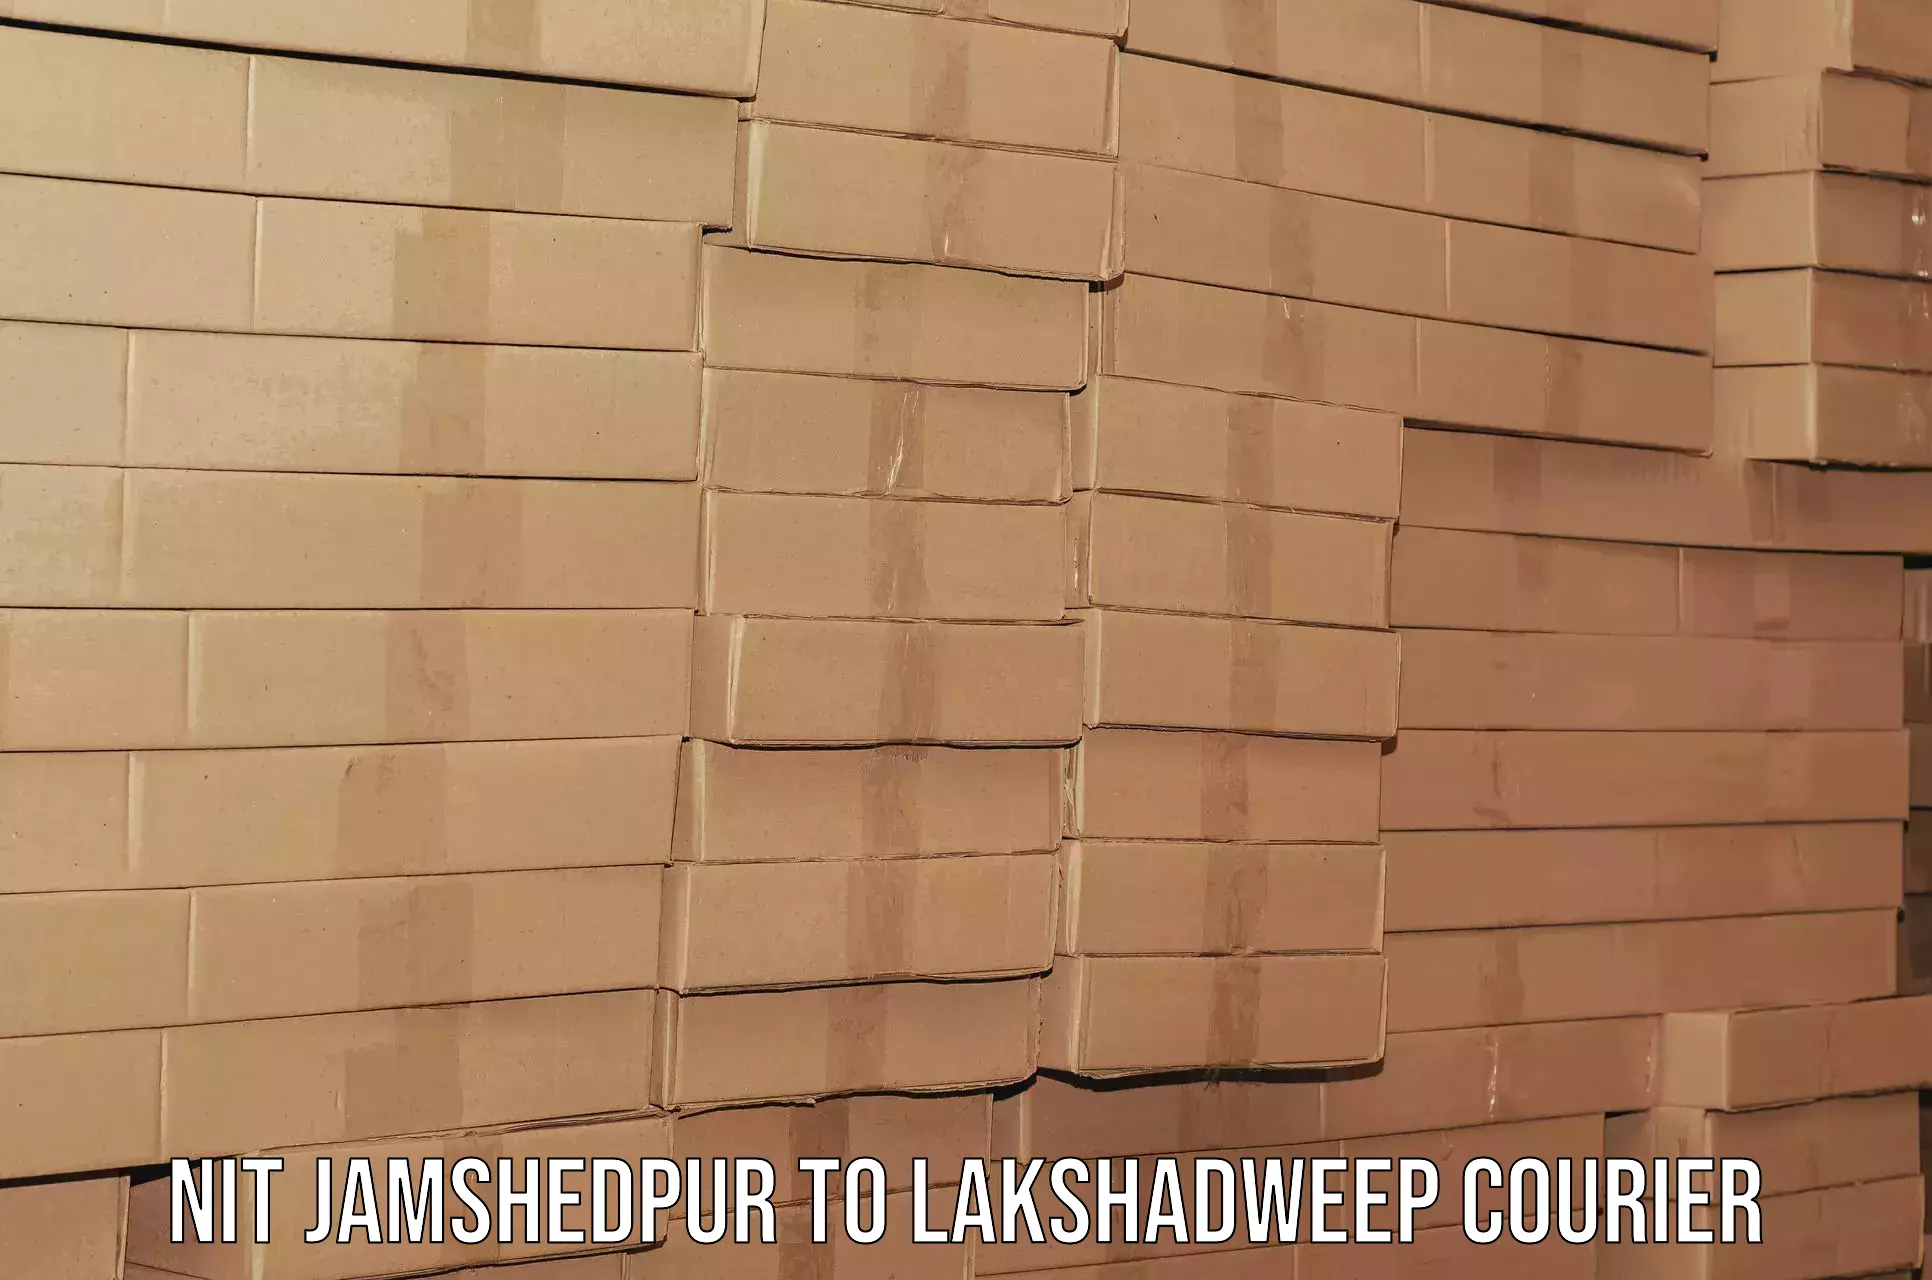 Residential moving experts NIT Jamshedpur to Lakshadweep